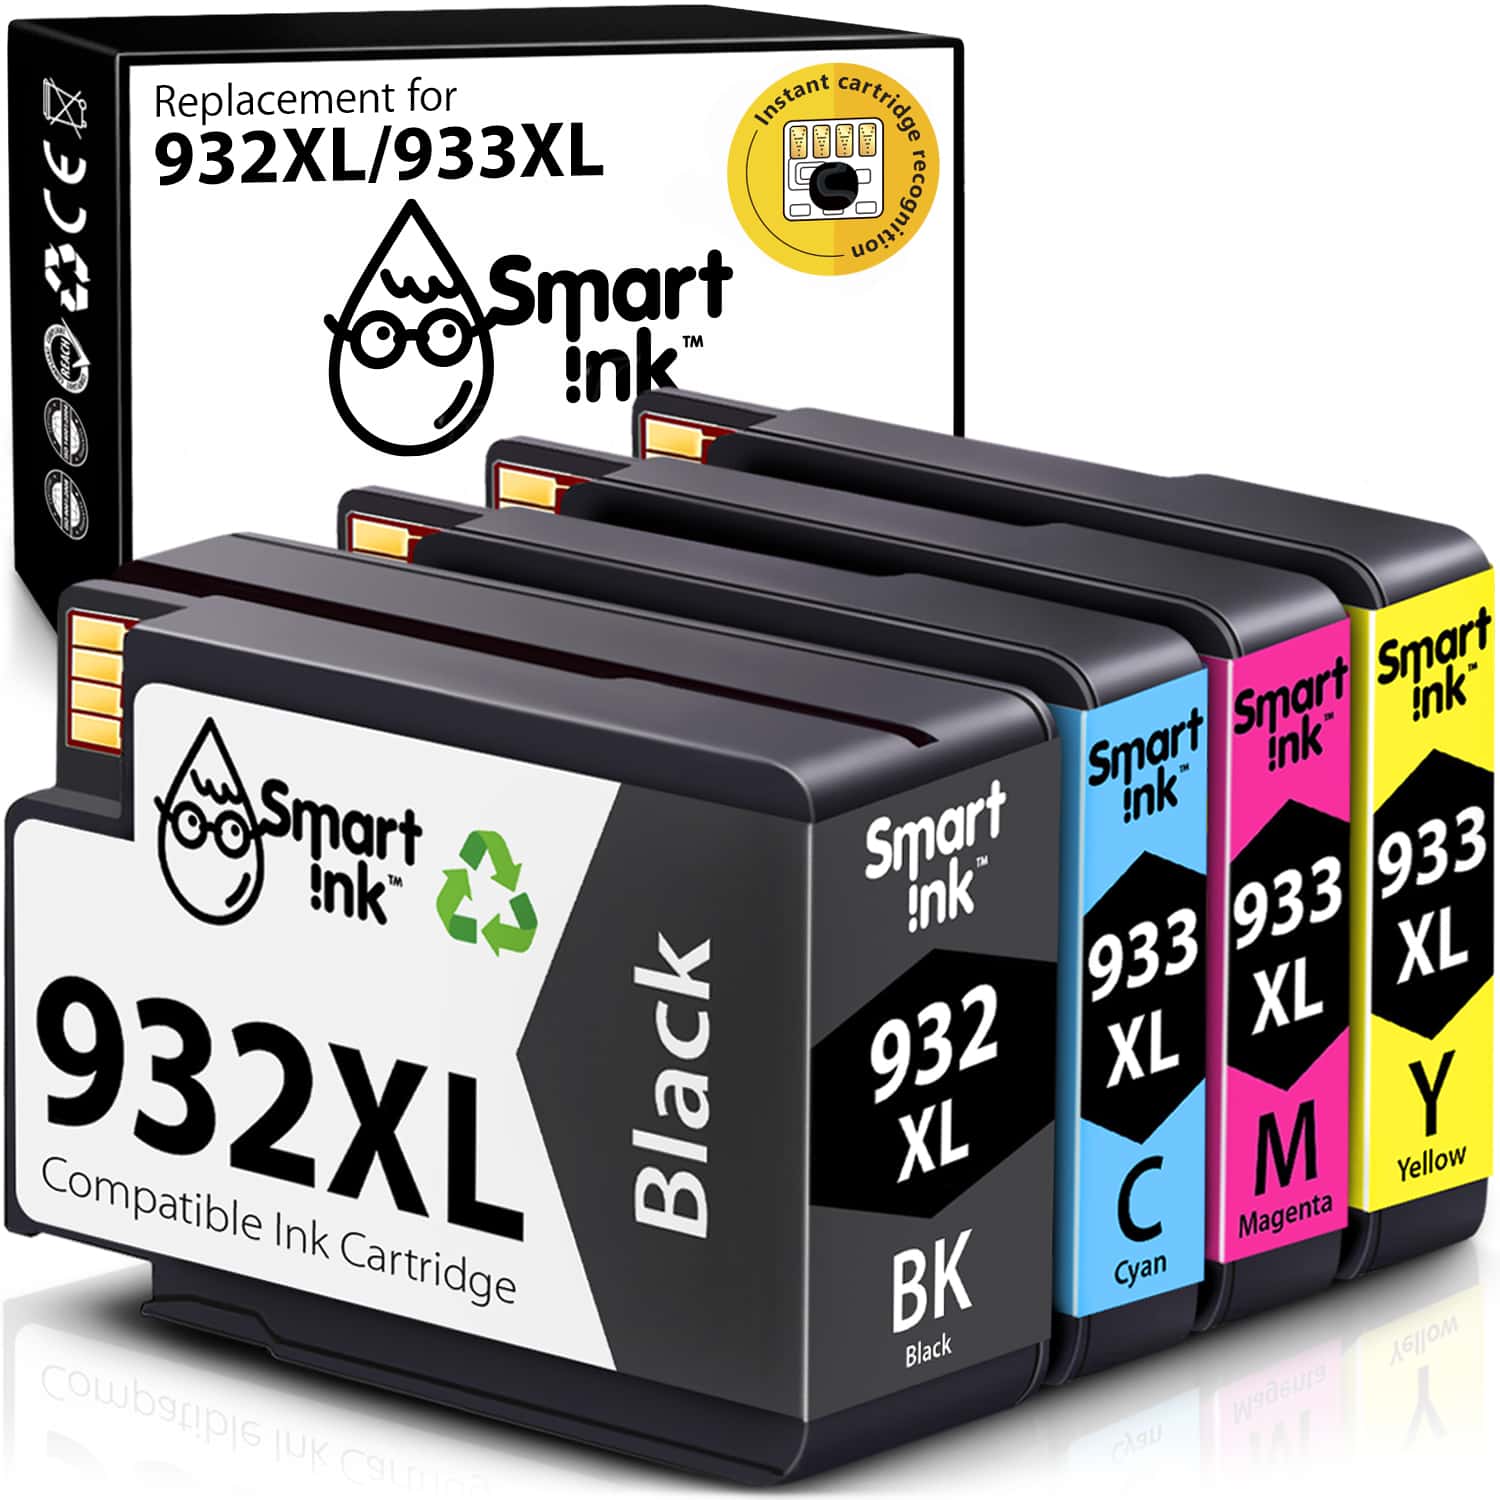 HP 932, 933 XL Ink Cartridge Replacement - Buy Printer Cartridges in EU at the price | Smart Ink